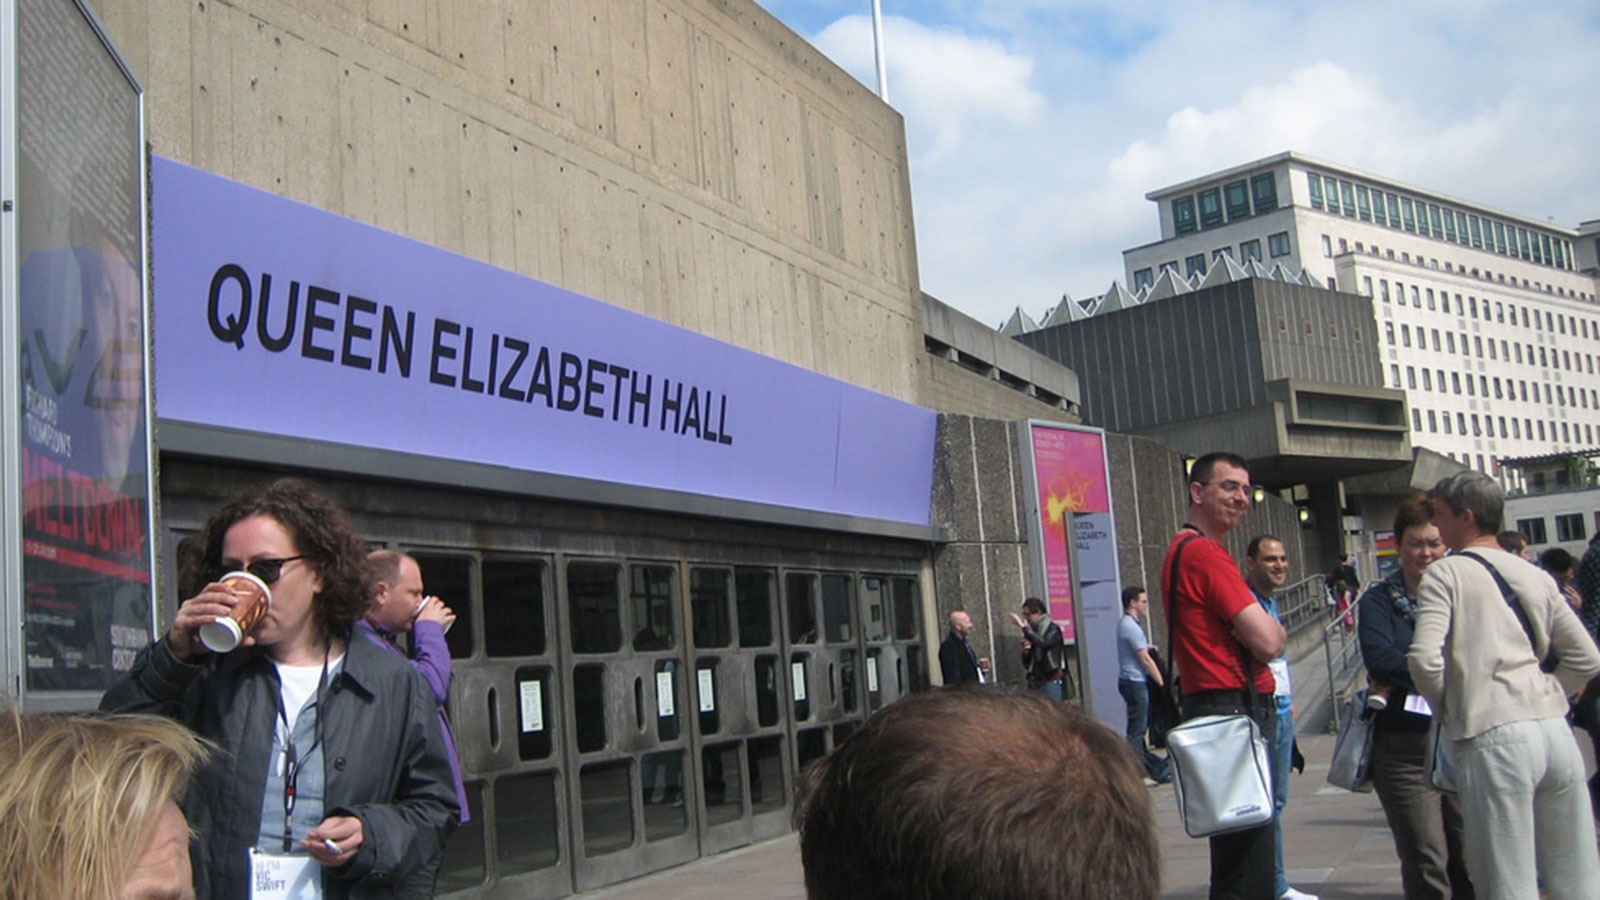 @media 2010 - Web-Konferenz in London: Queen Elisabeth Hall © echonet communication